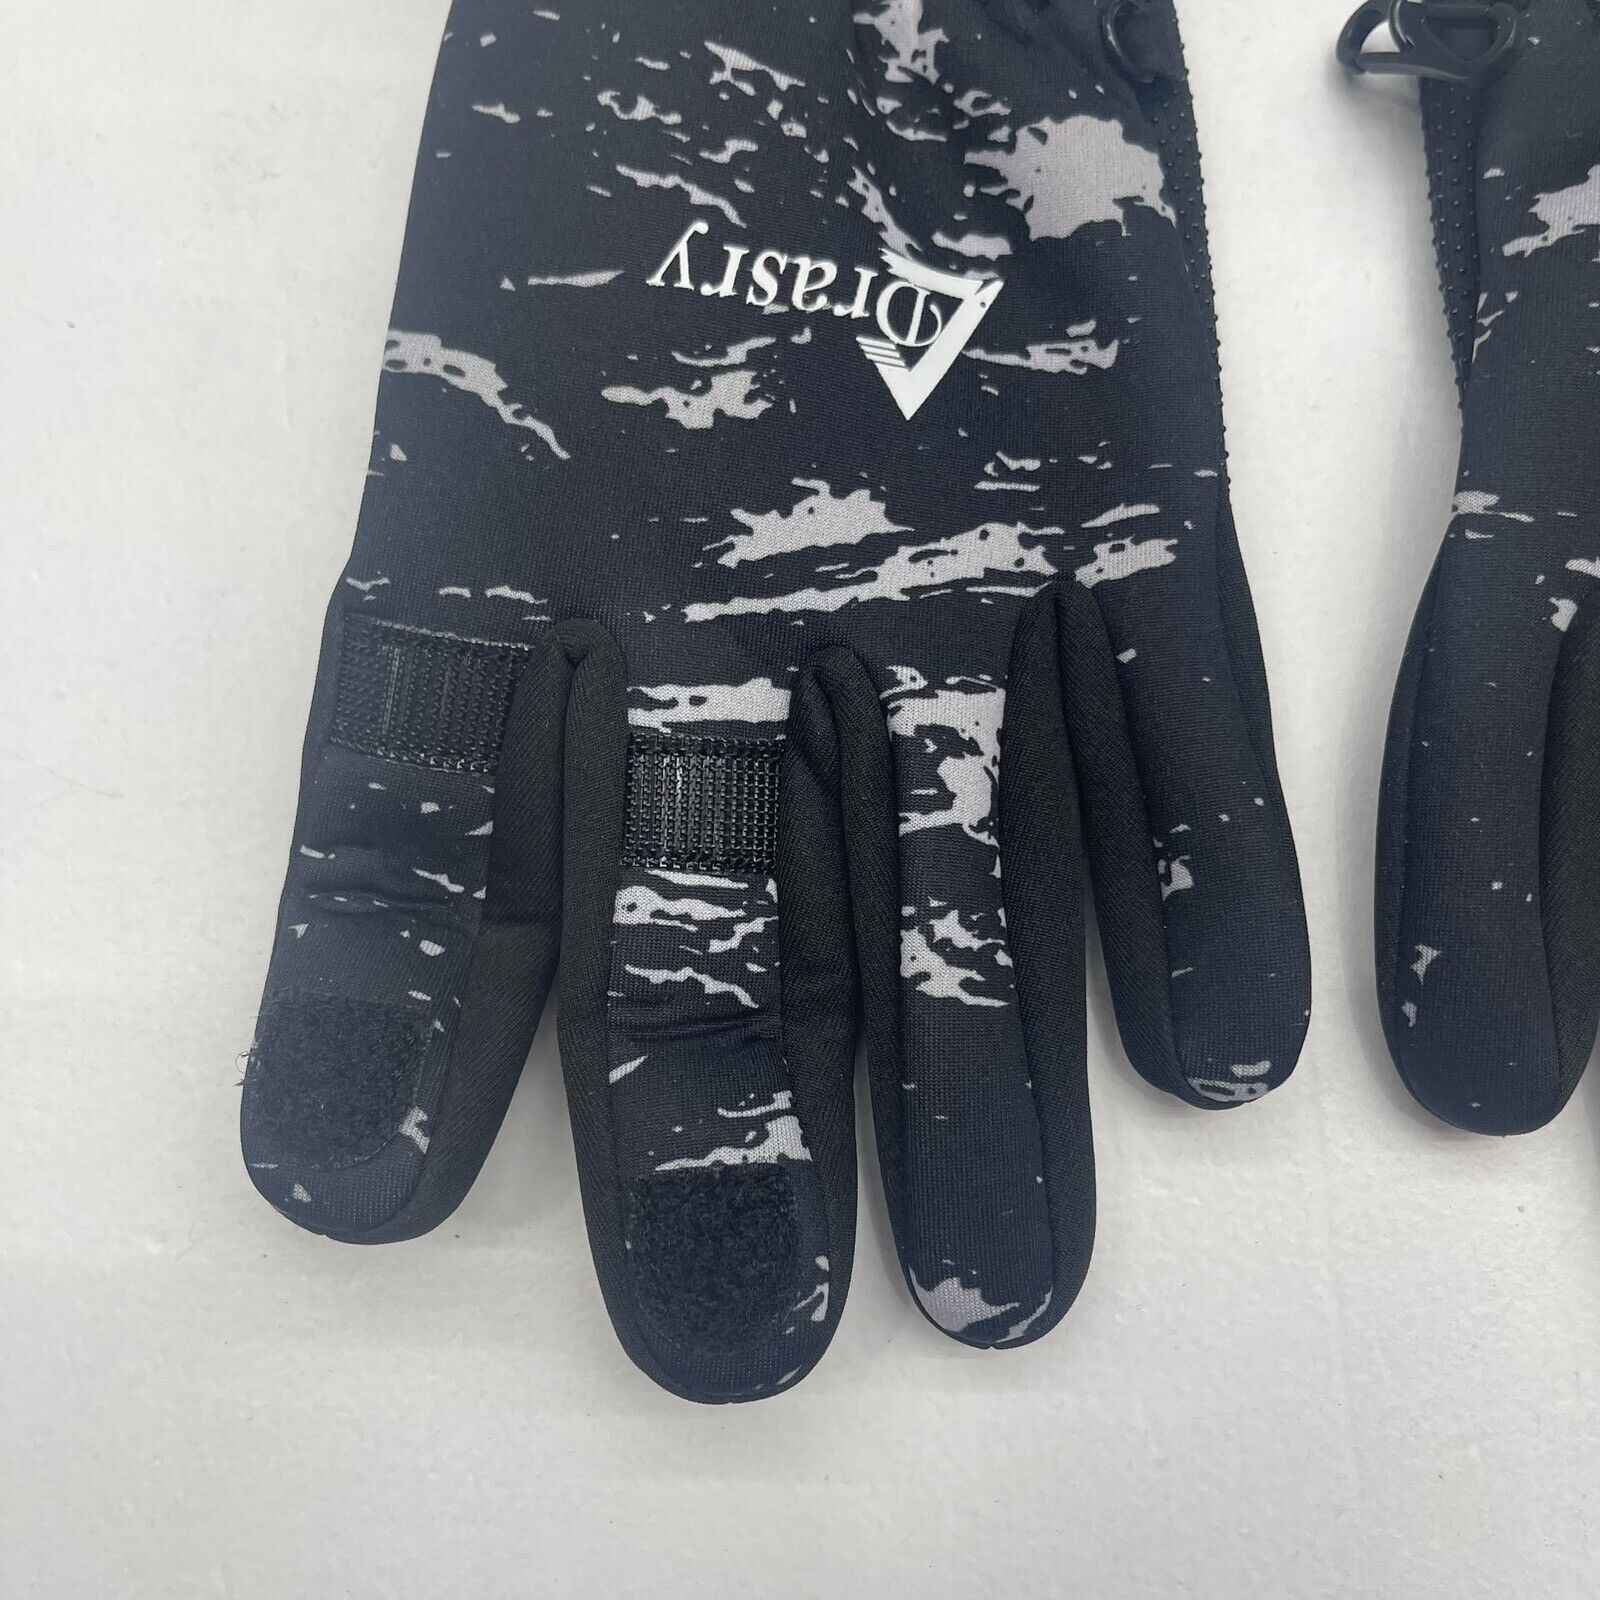 Drasry Black Neoprene Fishing Gloves Adults Size Large NWOT